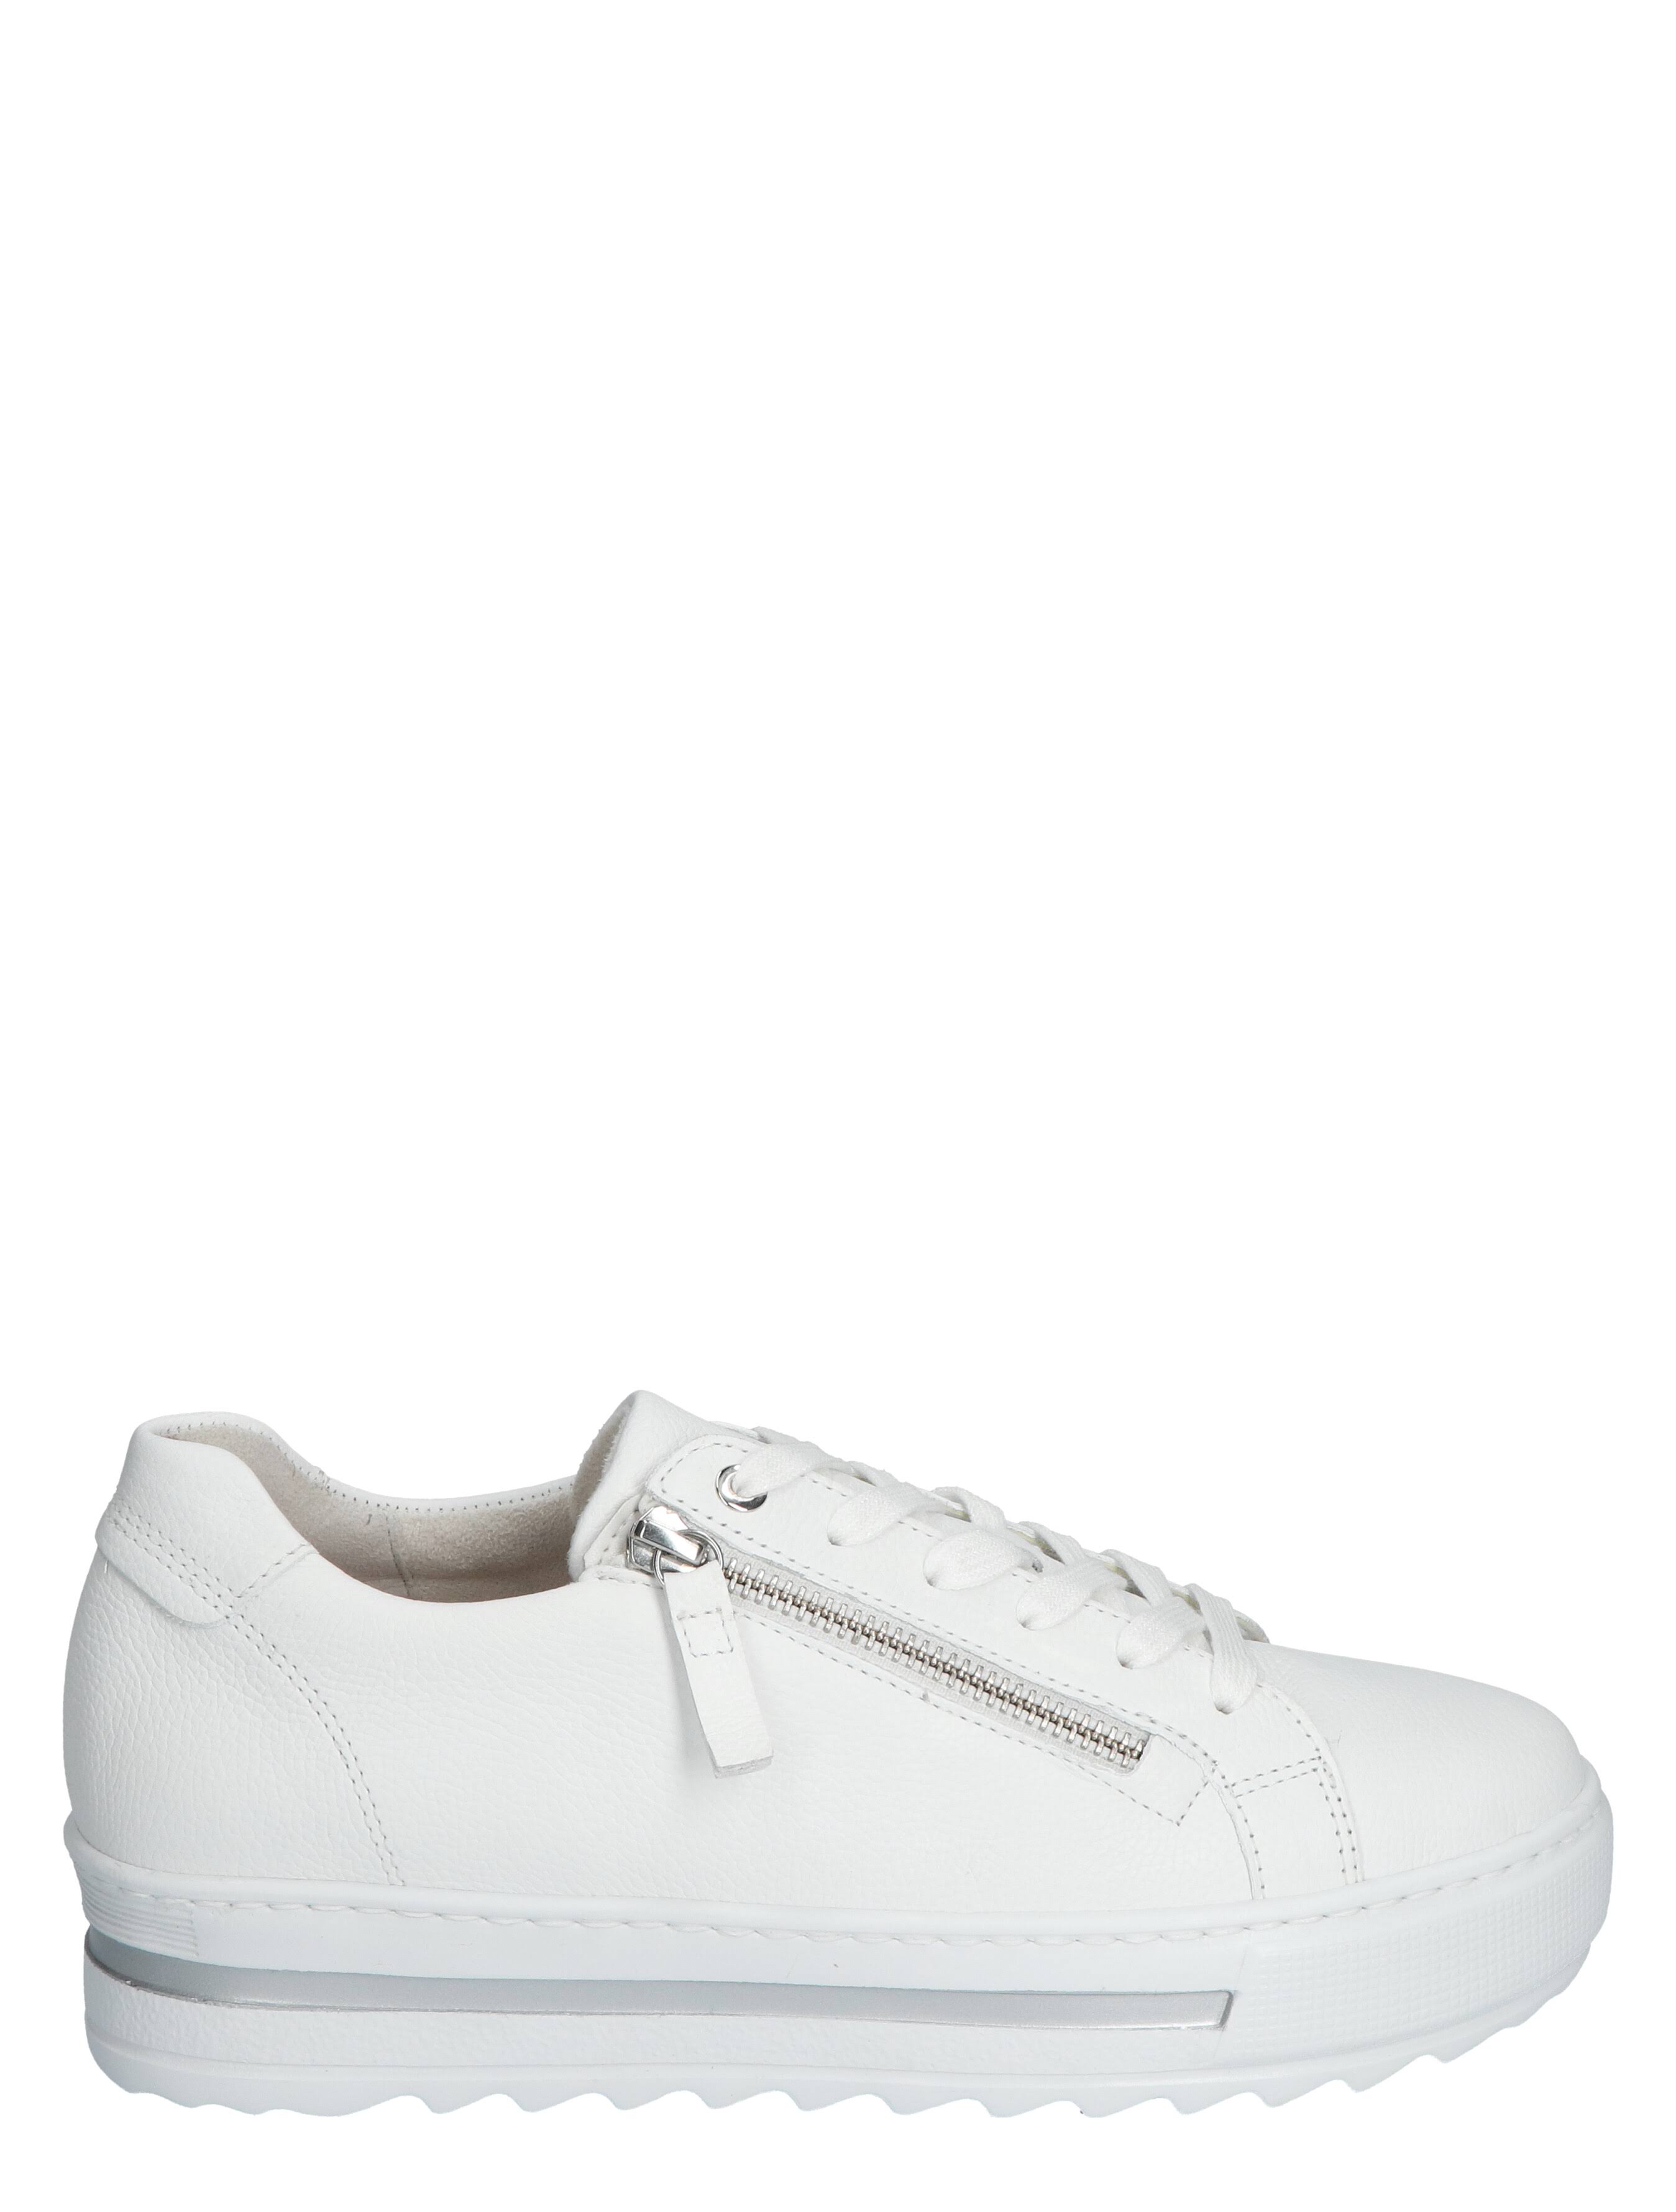 Bama Bama Sneaker Whitener 100ml Shoe Treatments & Polishes, White (Weiss),  100.00 ml